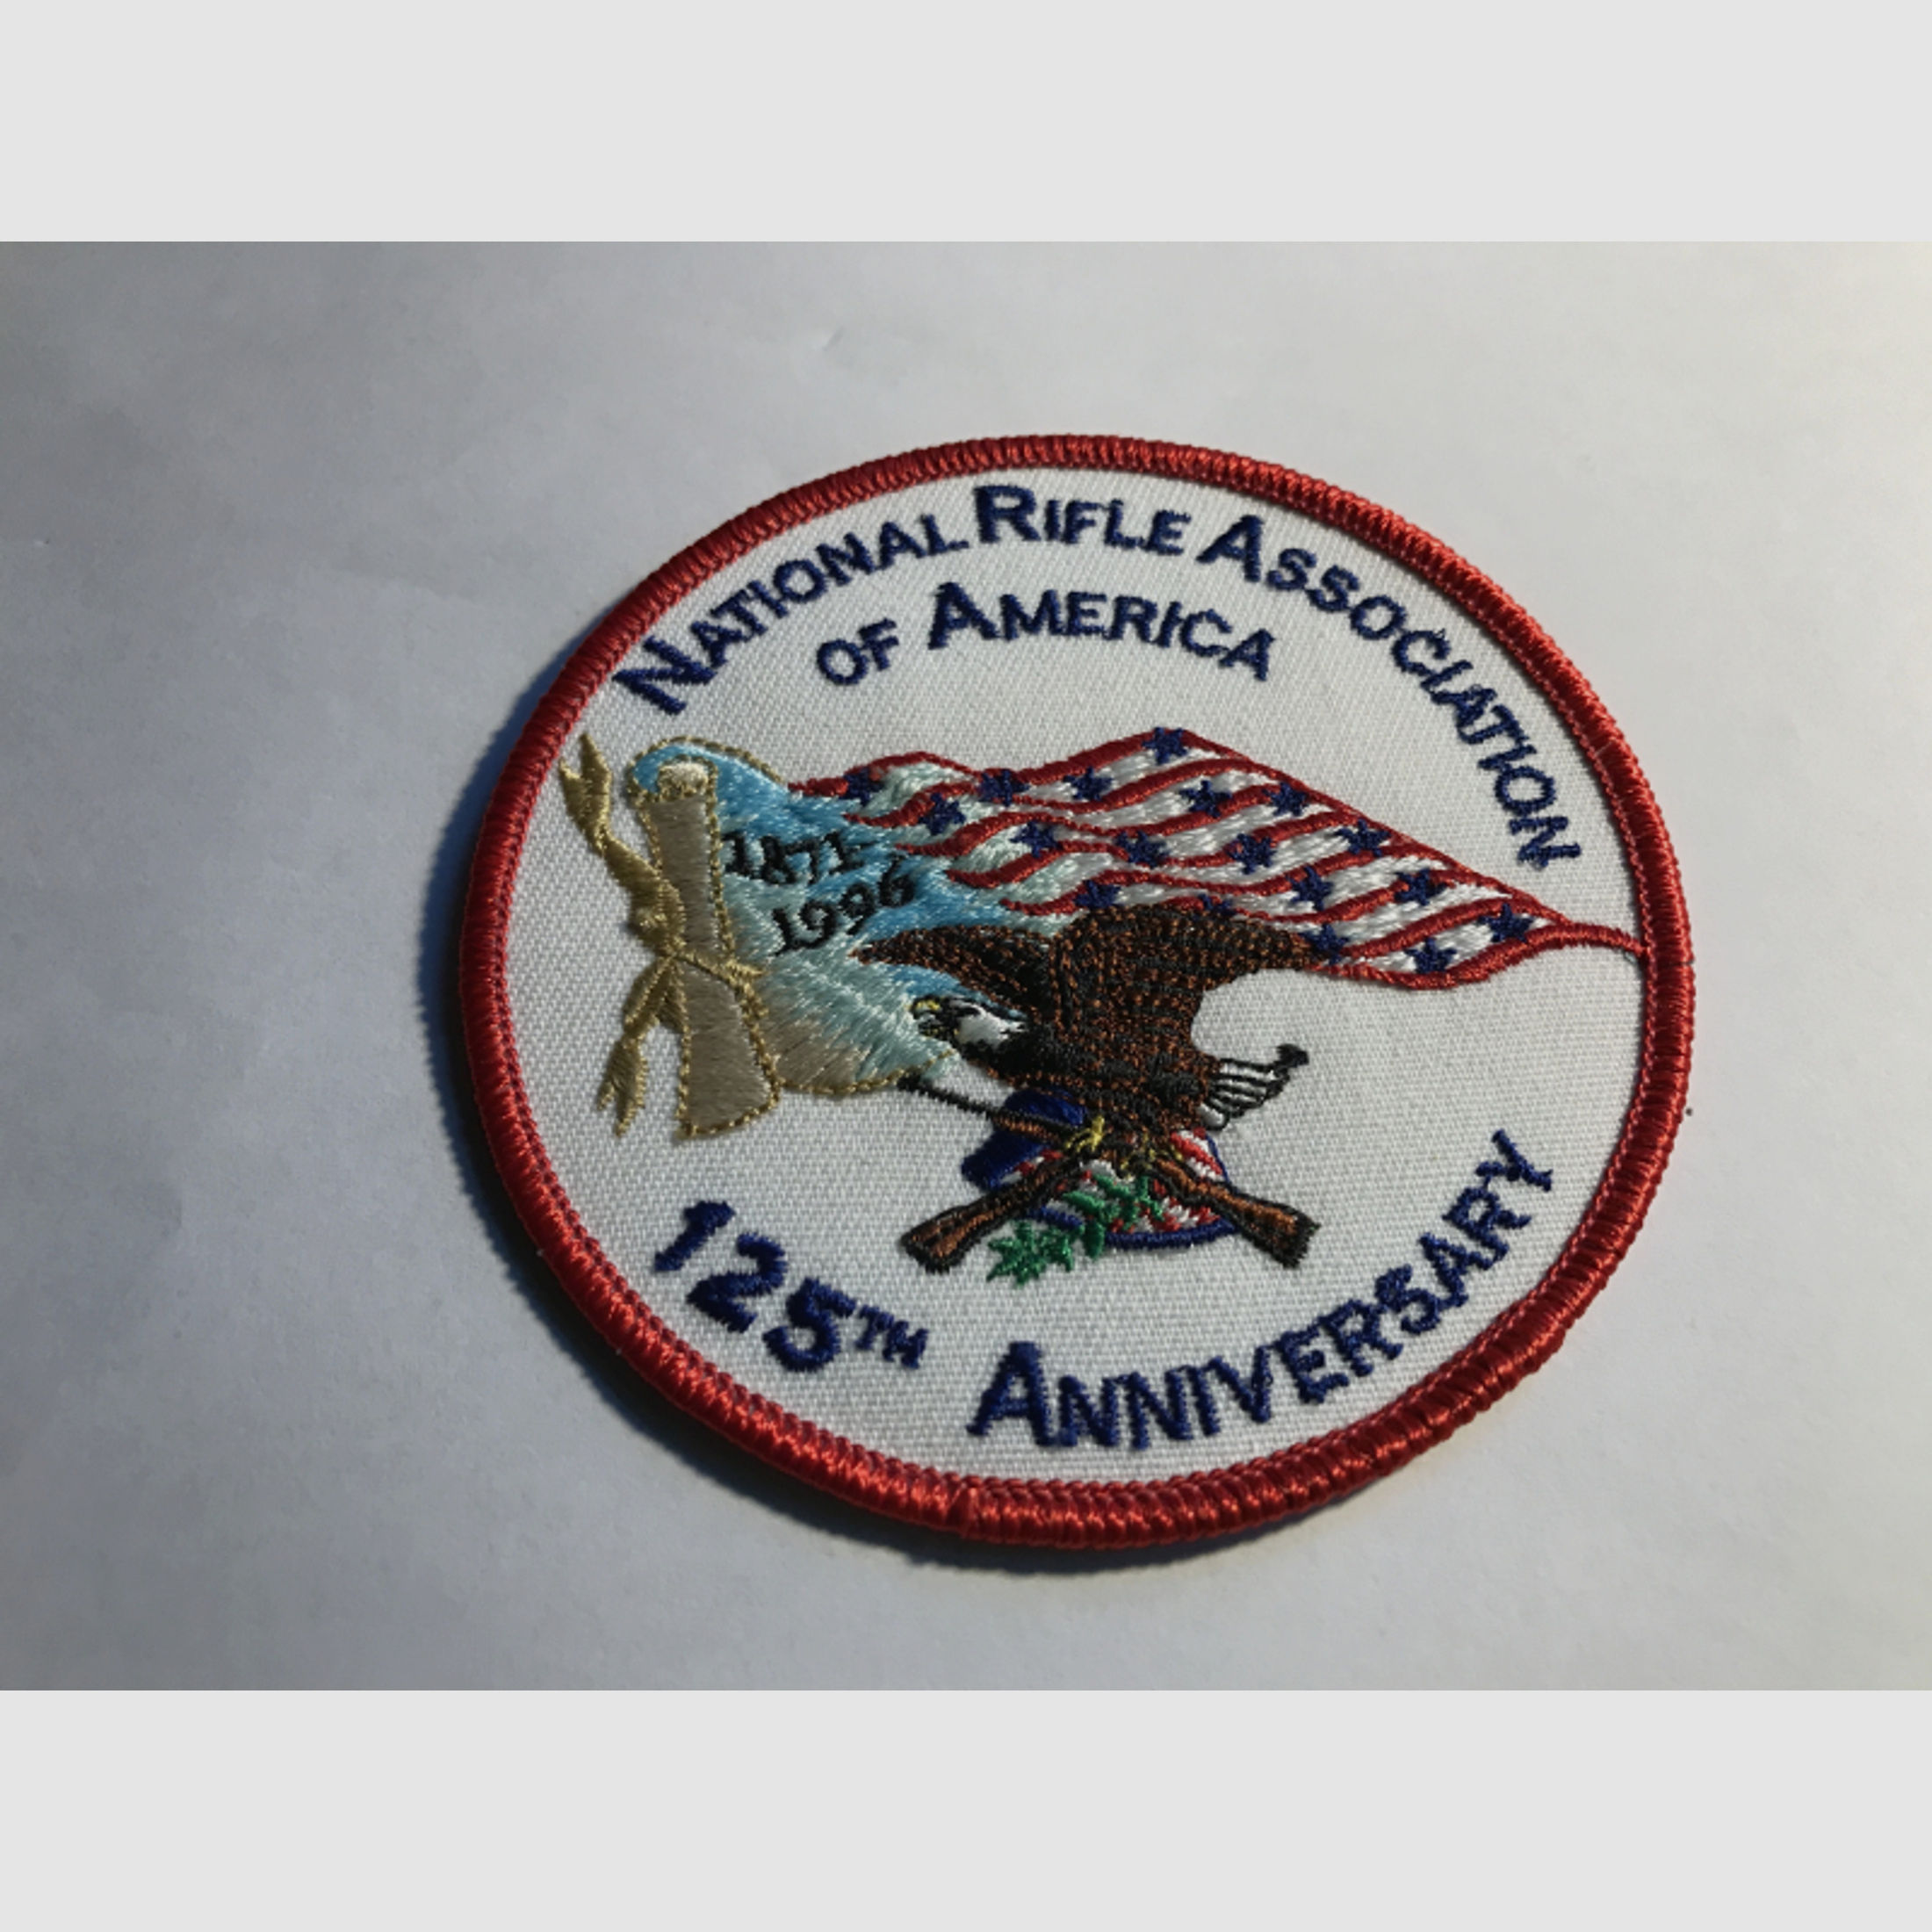 Aufnäher National Rifle Association, 125 years 1996